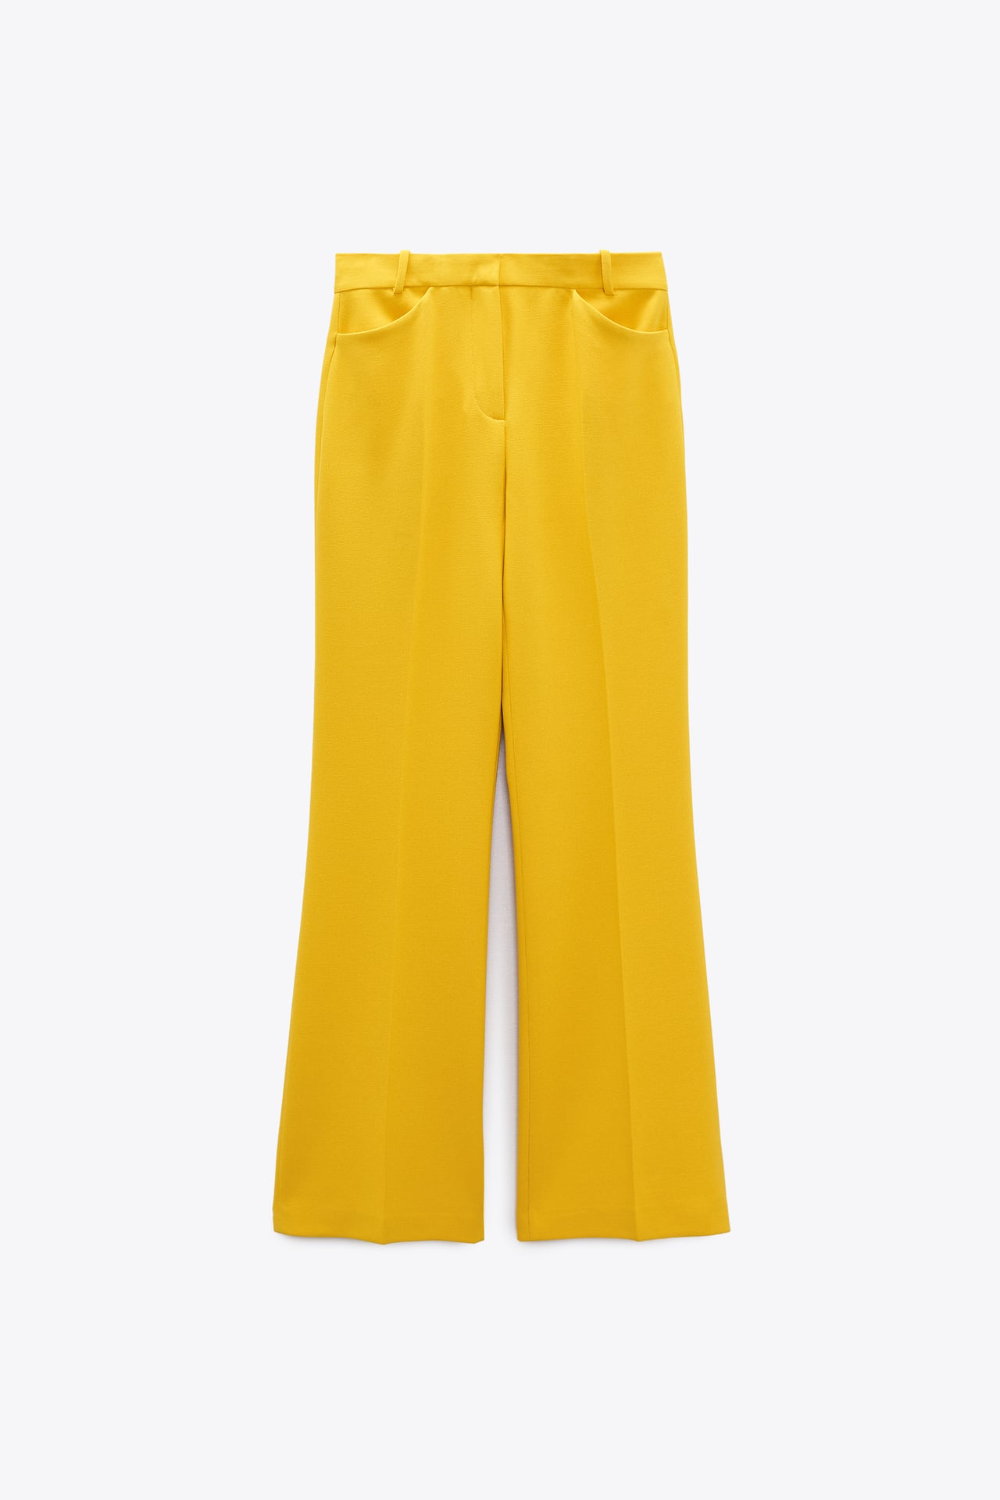 https://flyfiercefab.com/wp-content/uploads/2022/05/Zara-Yellow-Textured-flared-pants.png